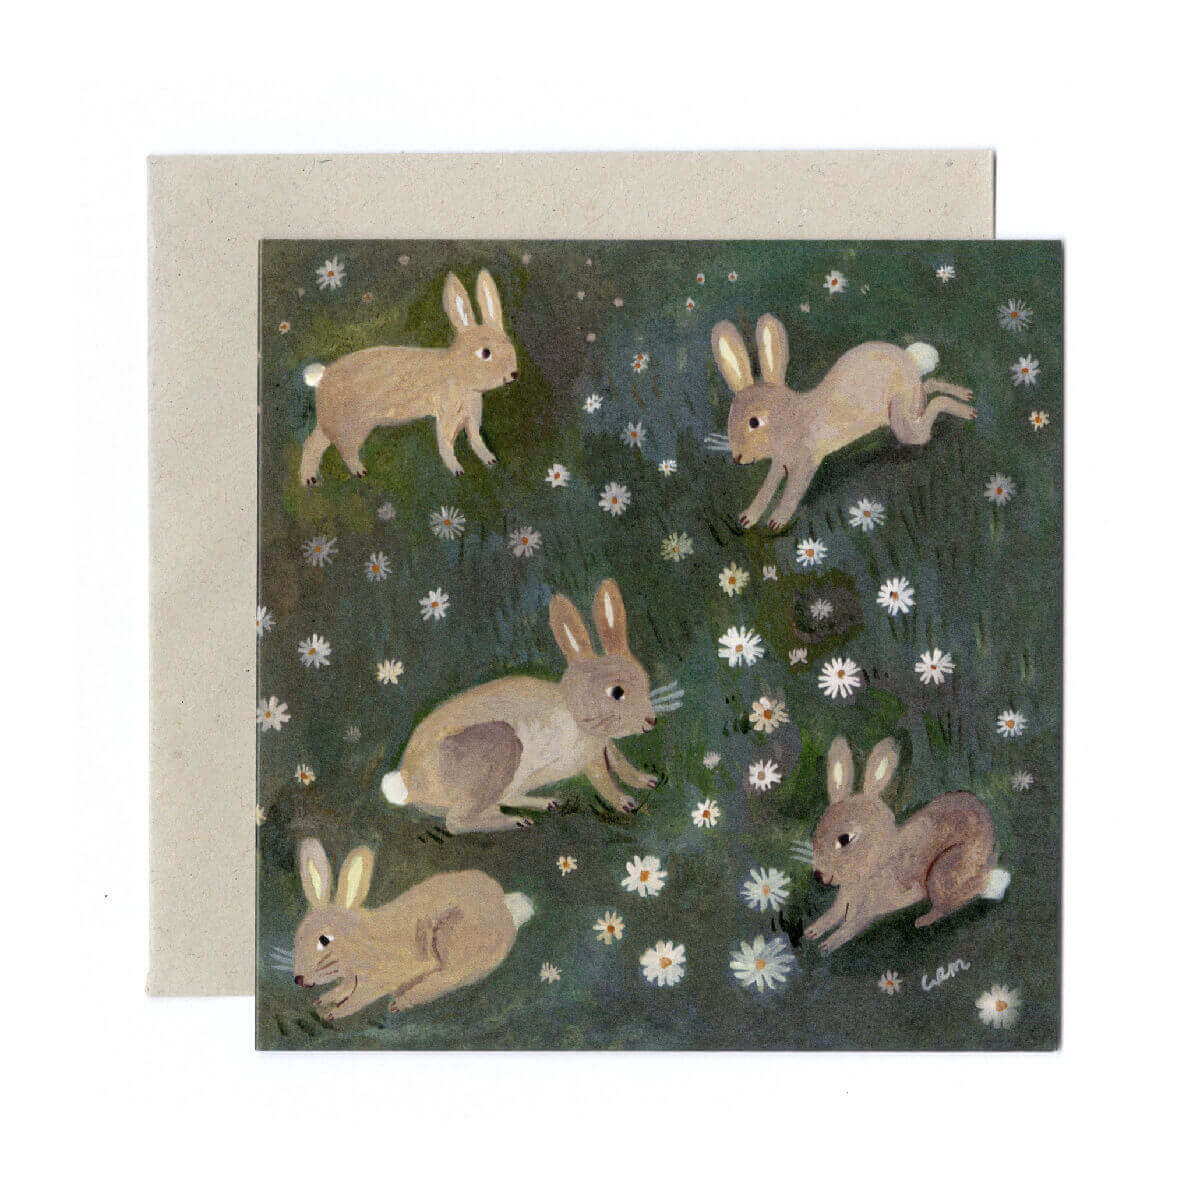    gemma-koomen-greeting-card-rabbits